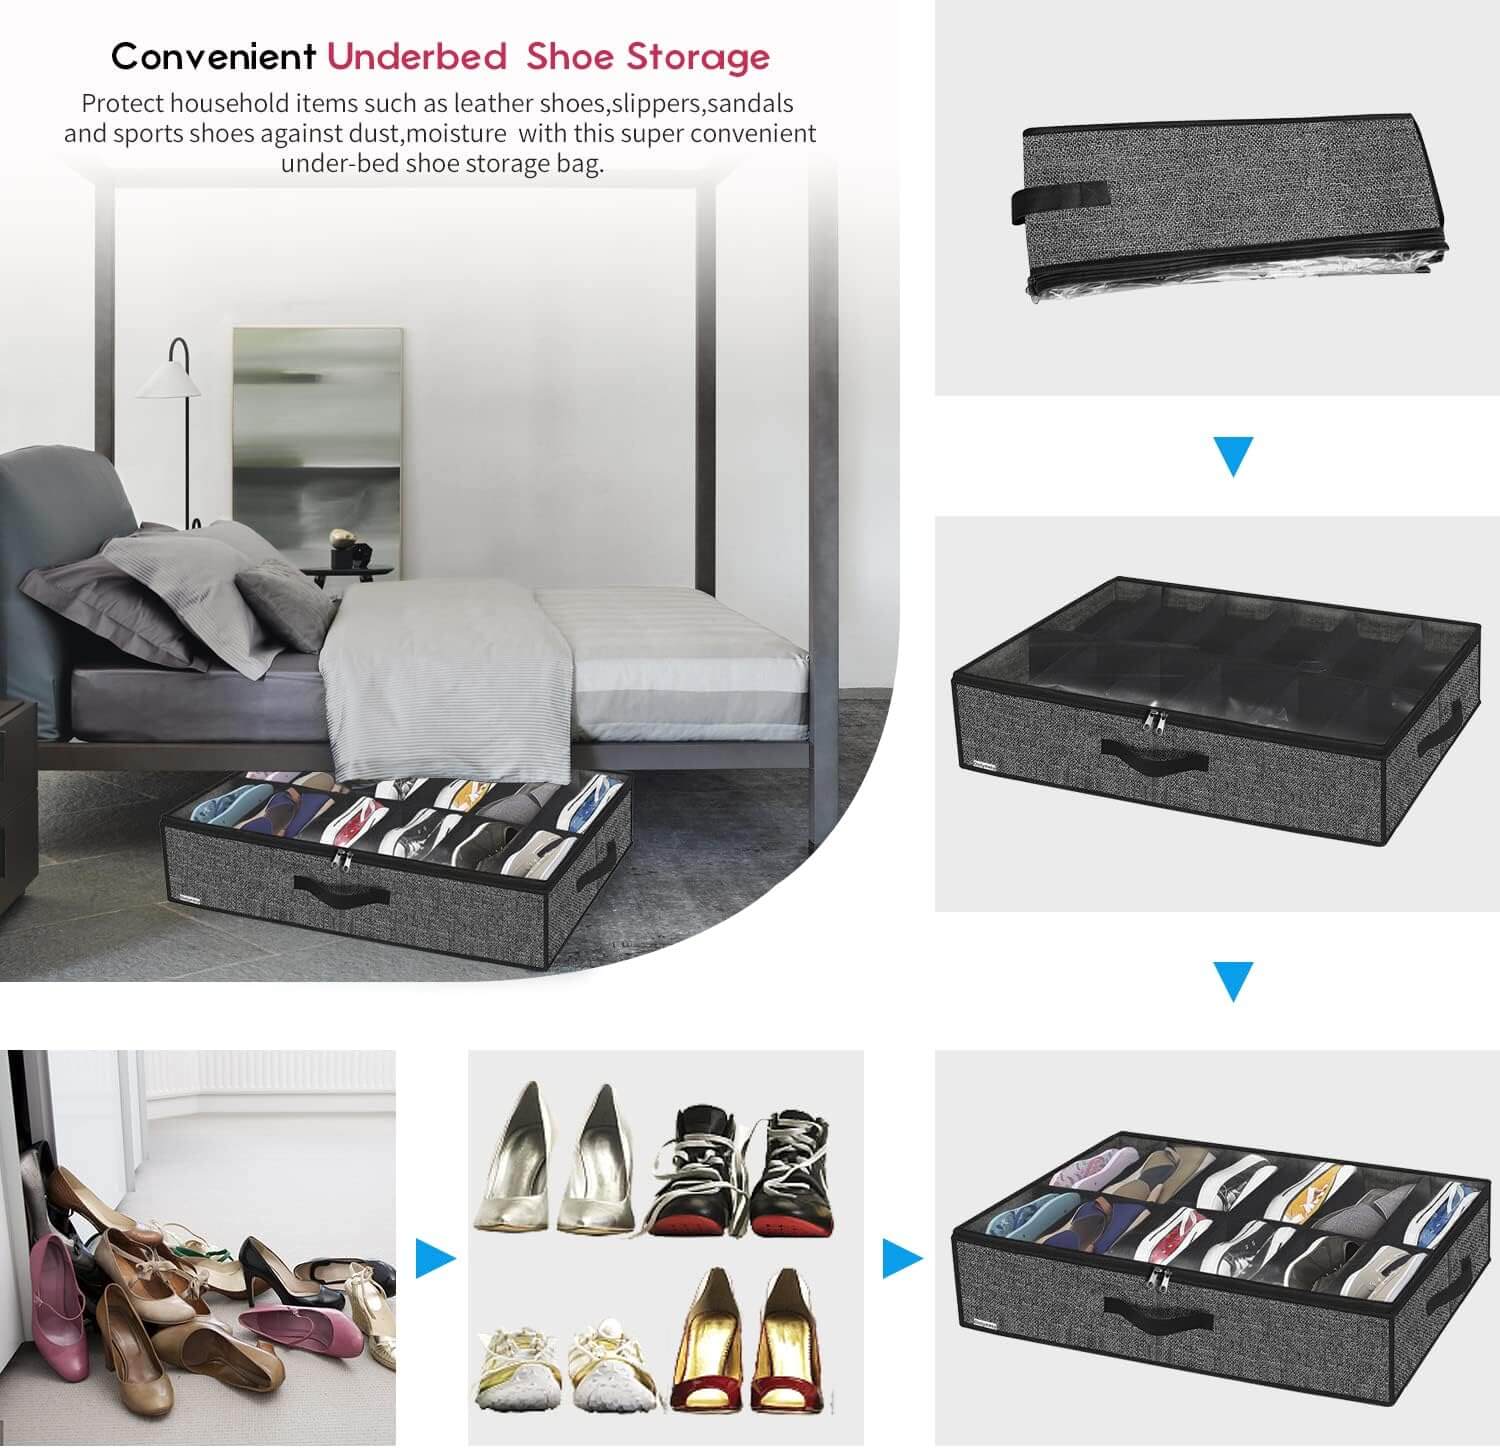 Under-bed and over-the-door storage options